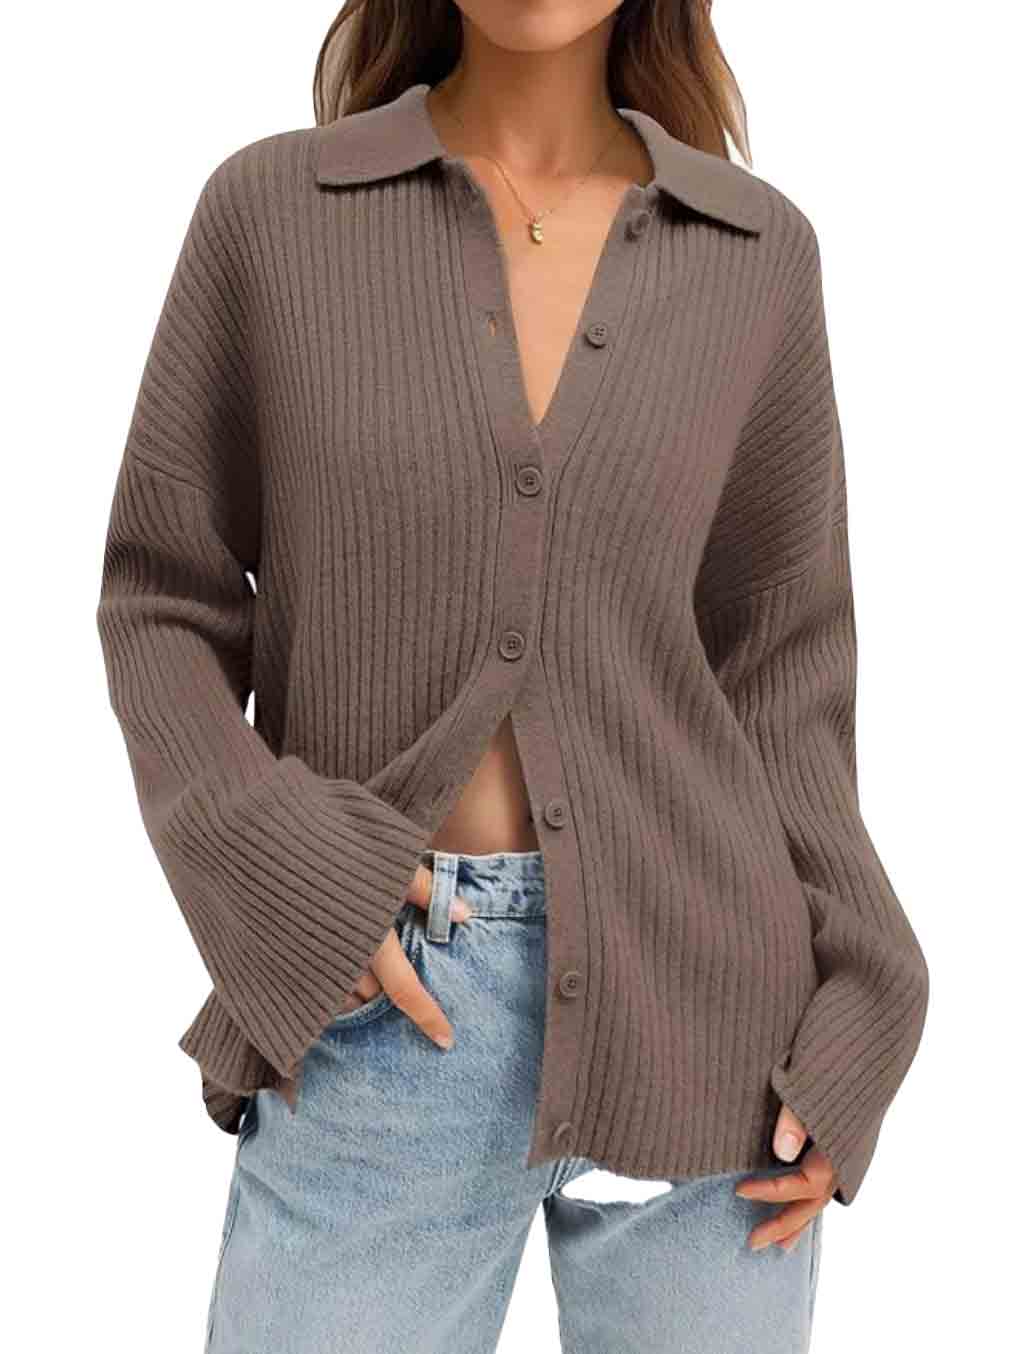 amazon collared sweater